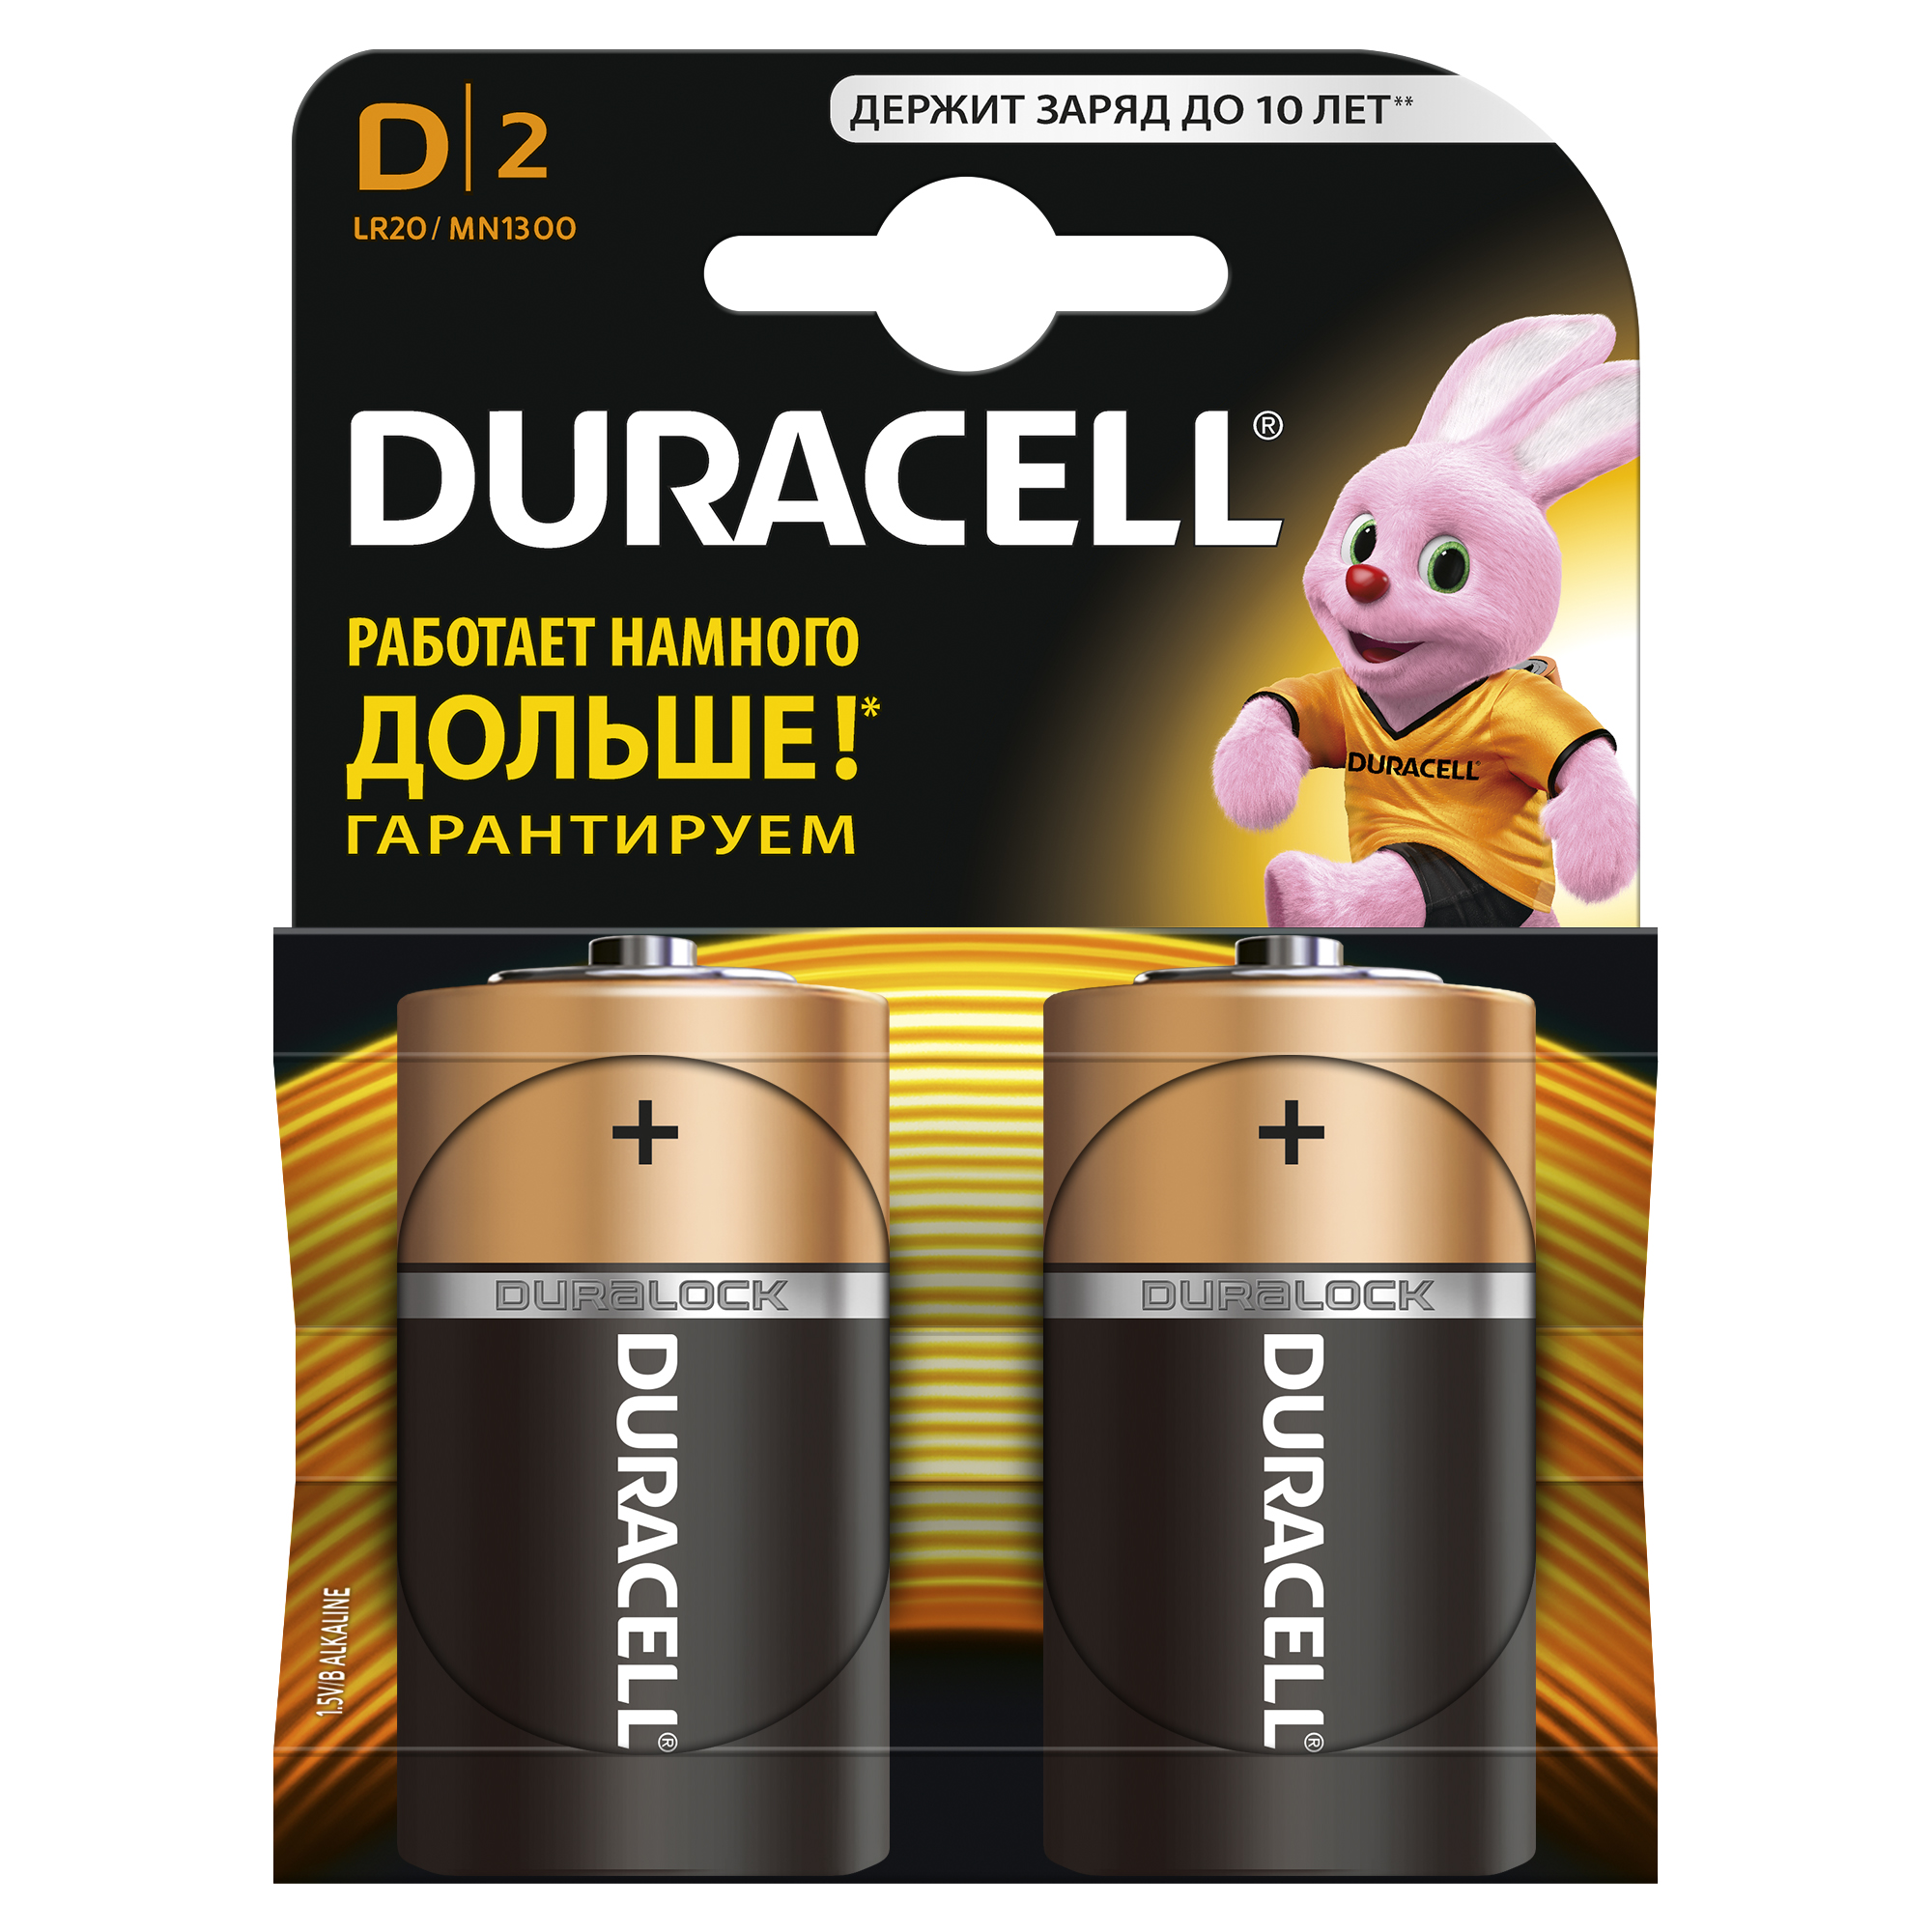 Duracell 81545439 Алкалиновая батарейка типа LR20 / "D" / MN1300 LR20-2BL NEW